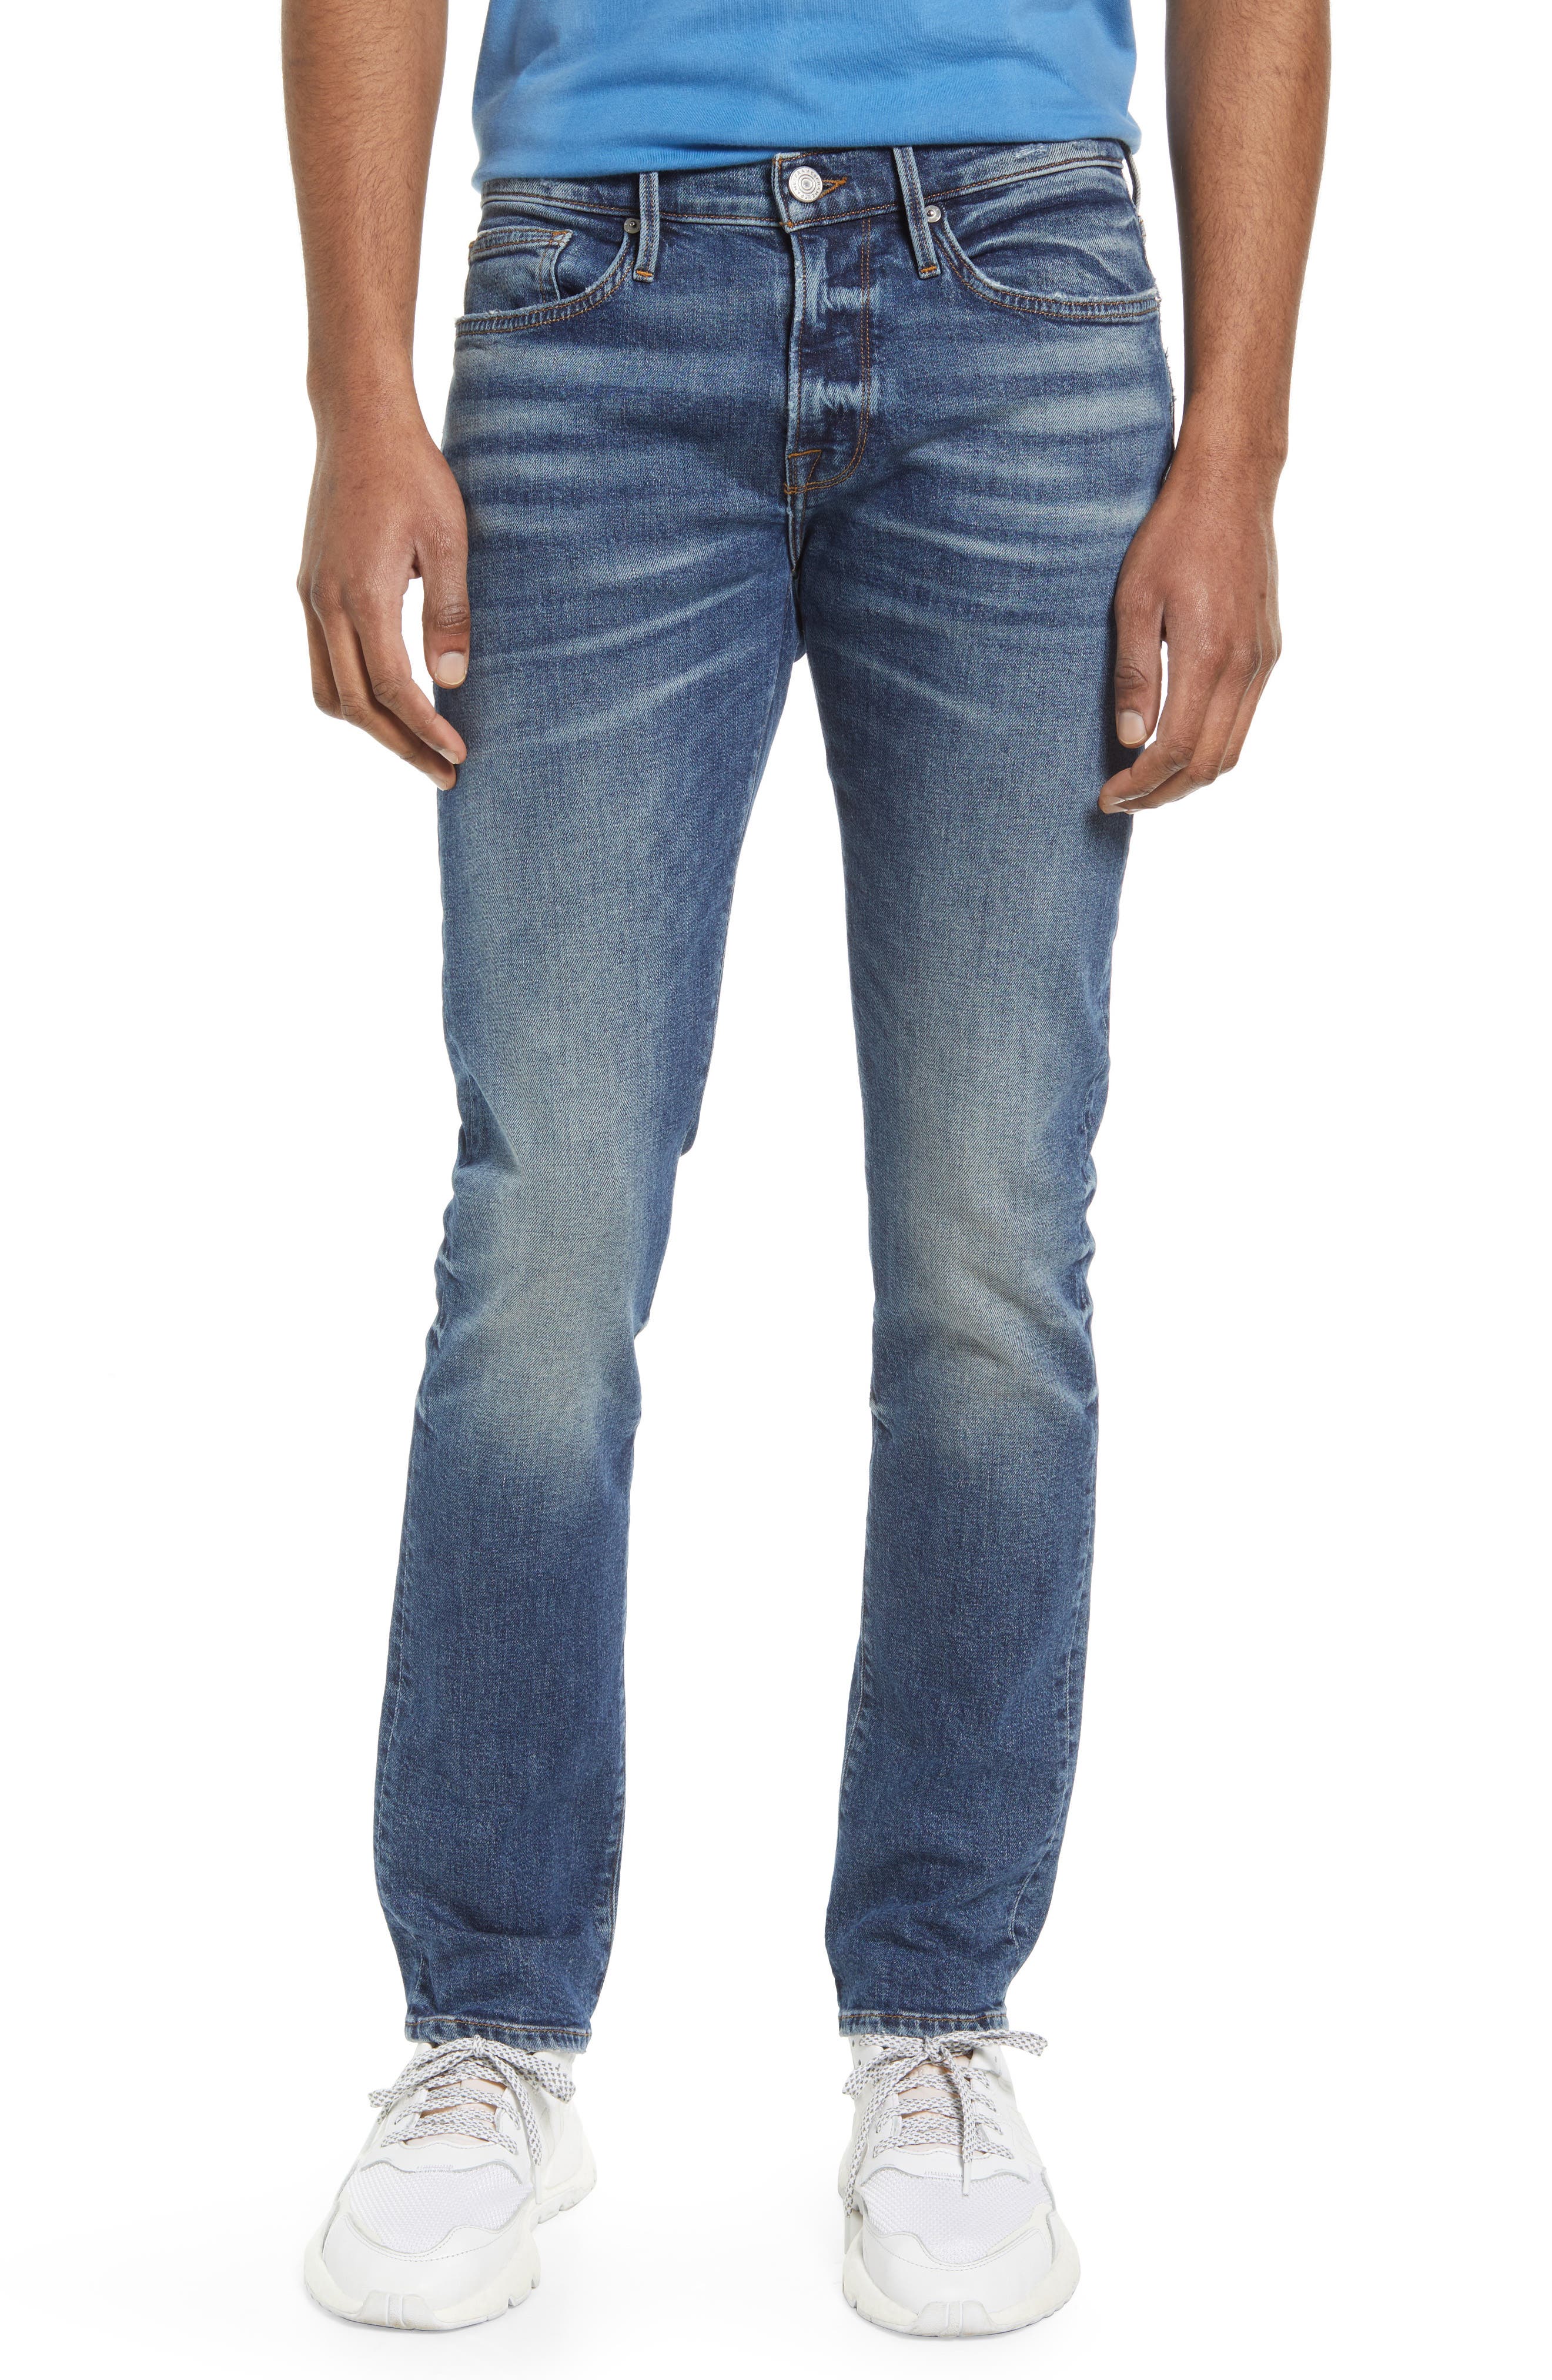 FRAME DENIM L'Homme Men's Mid Rise Slim Denim Jeans Dark Grey $199 69